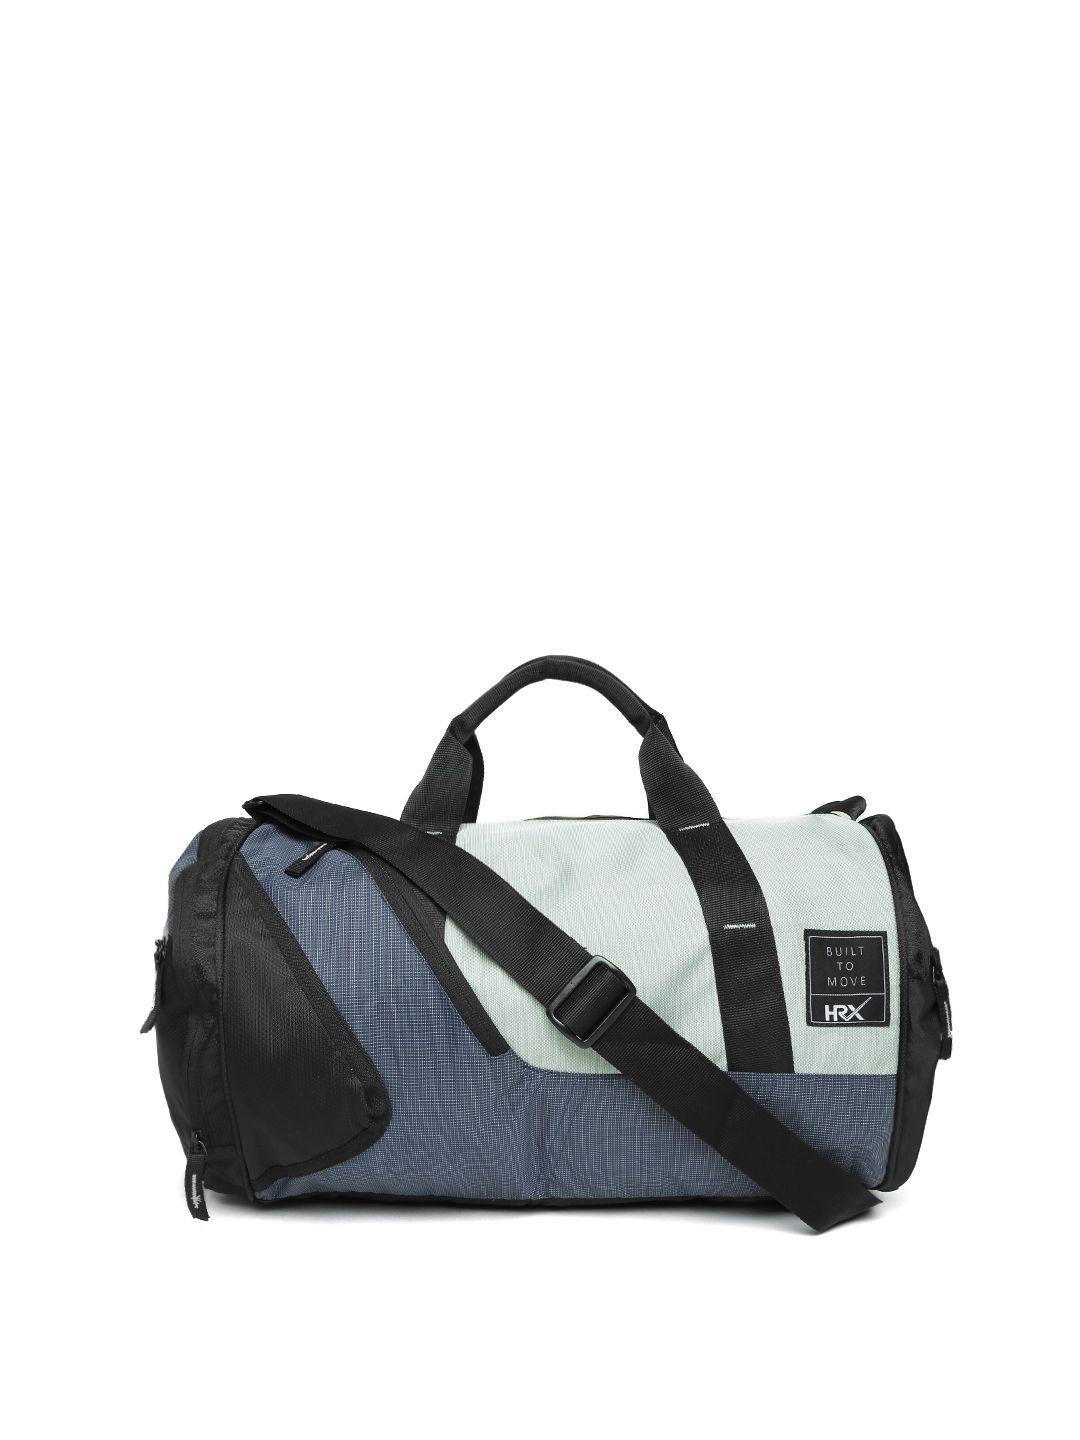 hrx by hrithik roshan unisex grey & navy blue colourblocked training duffel bag